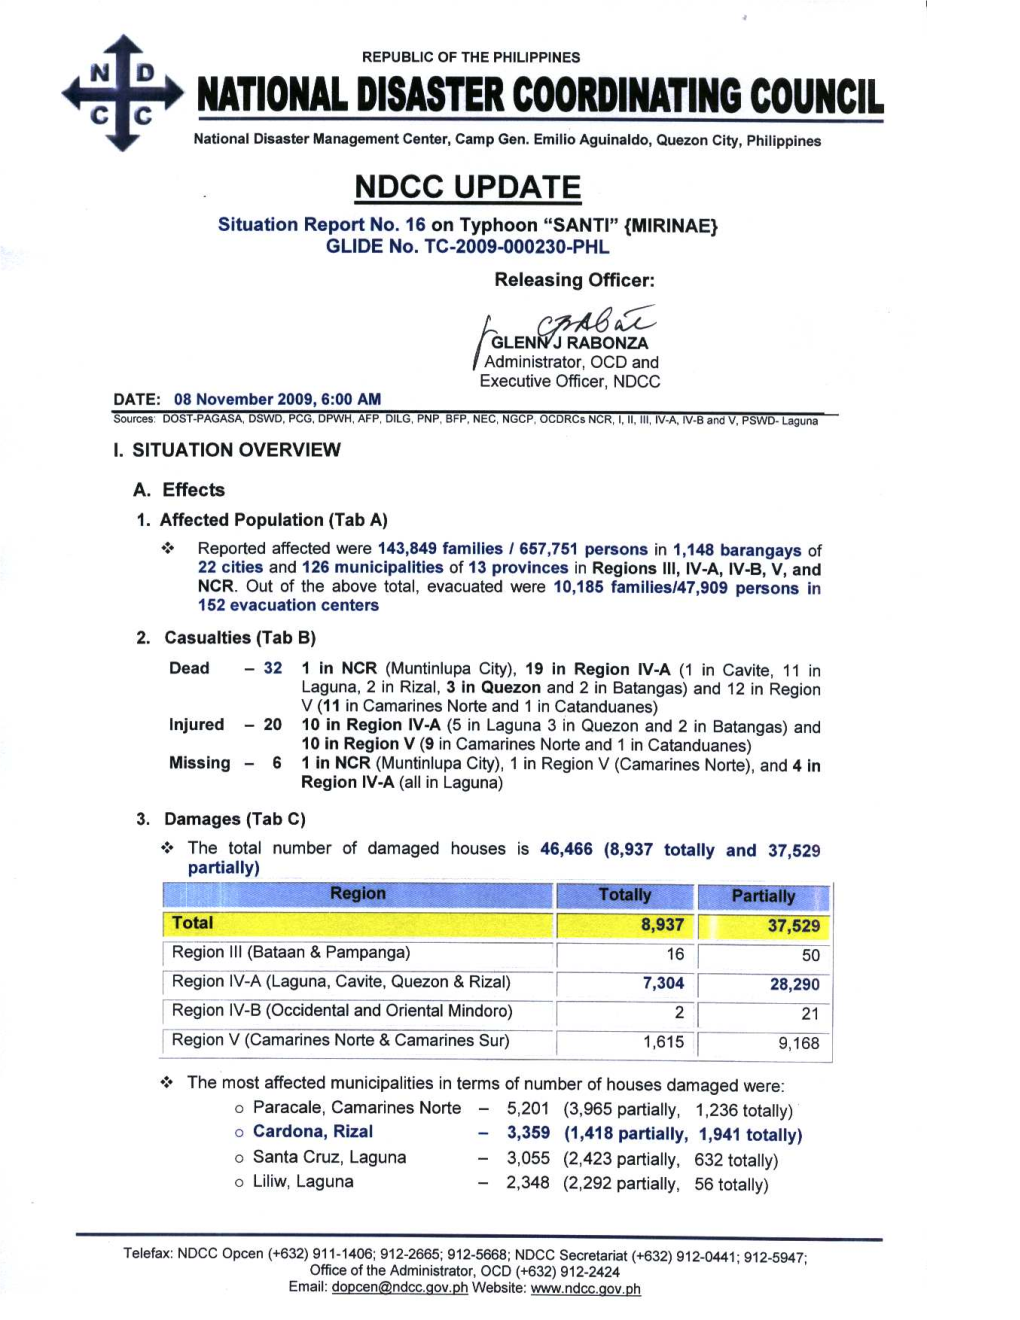 NDCC Update No. 16 on Typhoon SANTI As of 08 Nov 2009